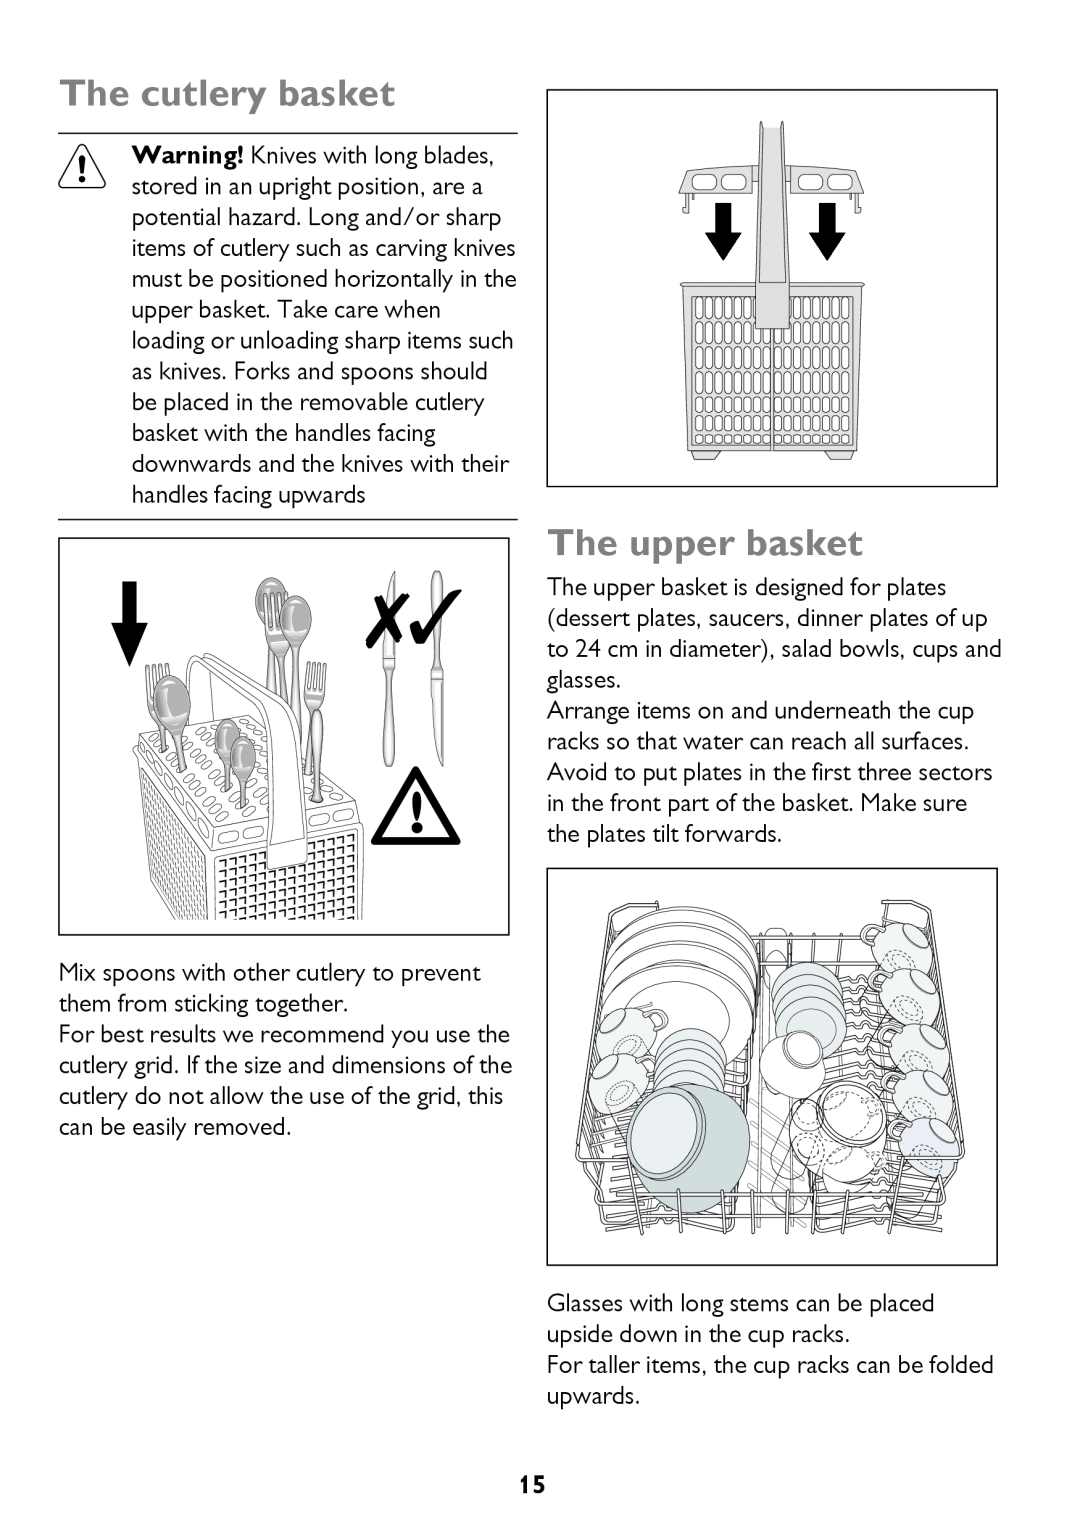 John Lewis JLBIDW 1201 instruction manual The cutlery basket, The upper basket 